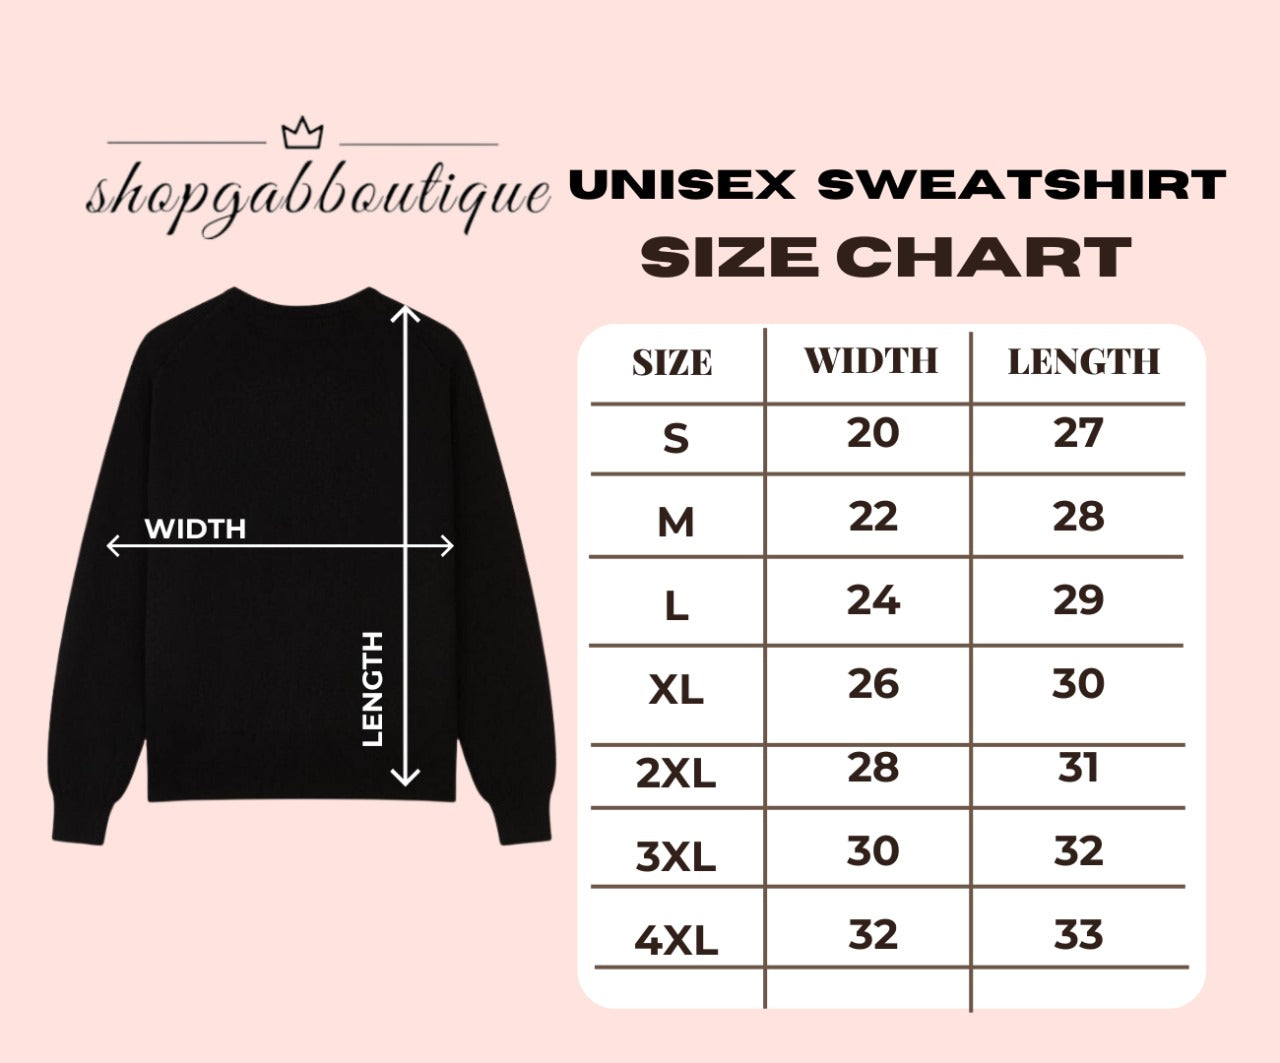 God First Crewneck Sweatshirt (Unisex)